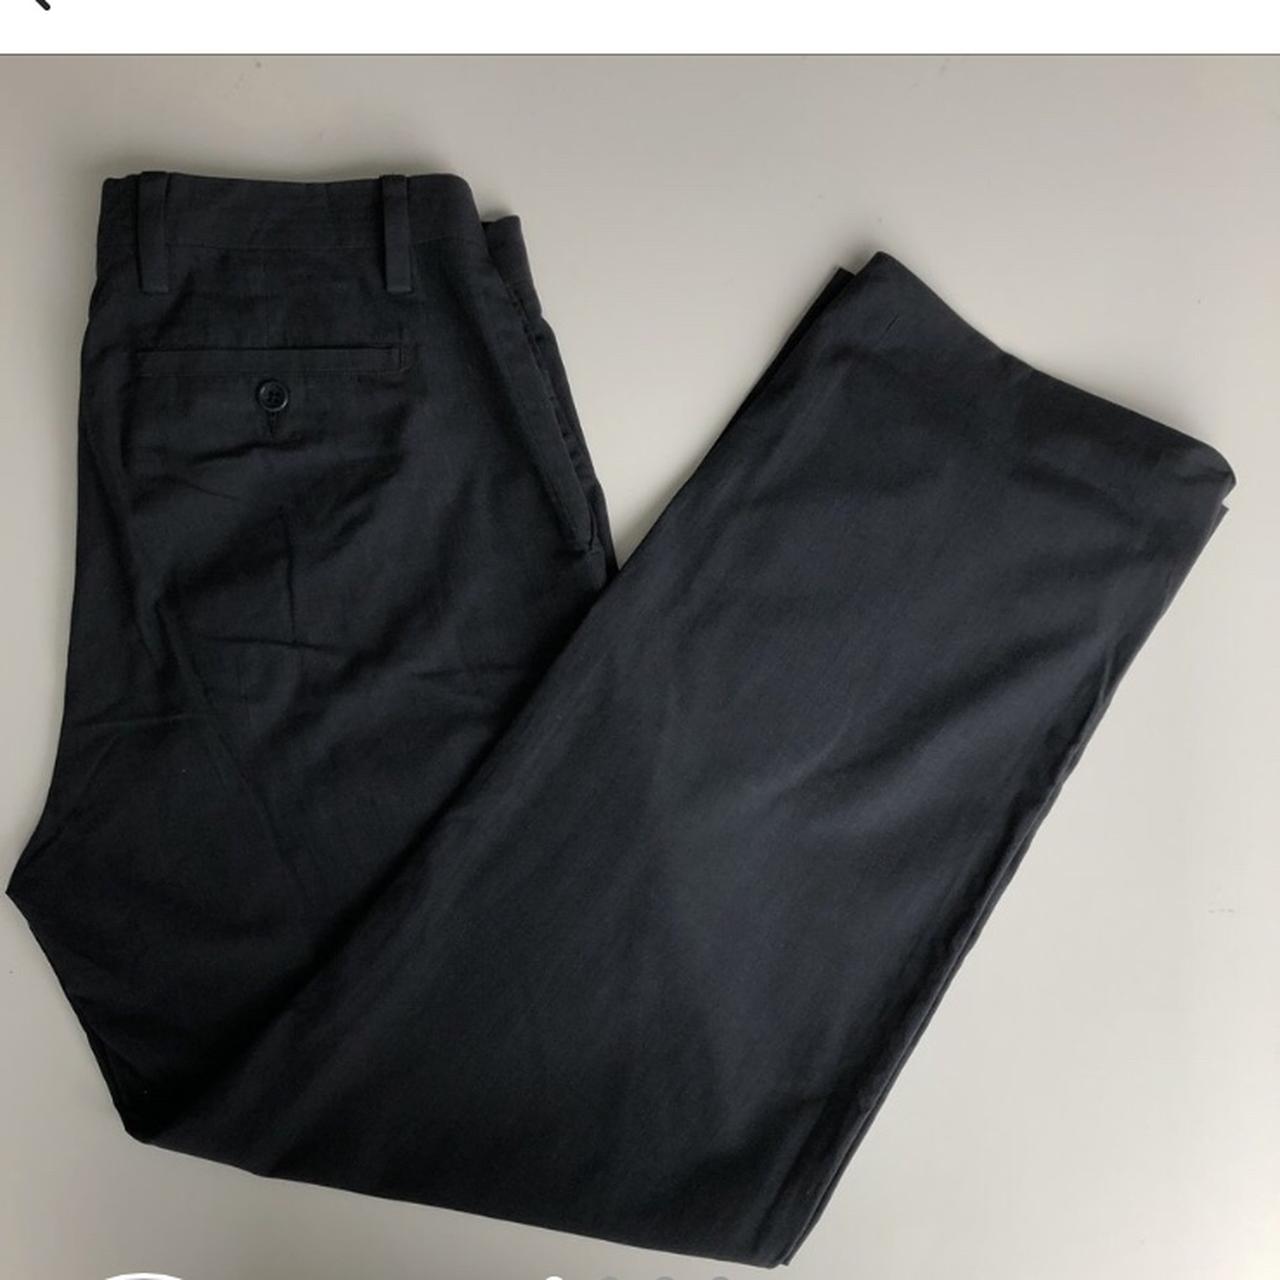 Trousers - Banana Republic smart grey trousers.... - Depop